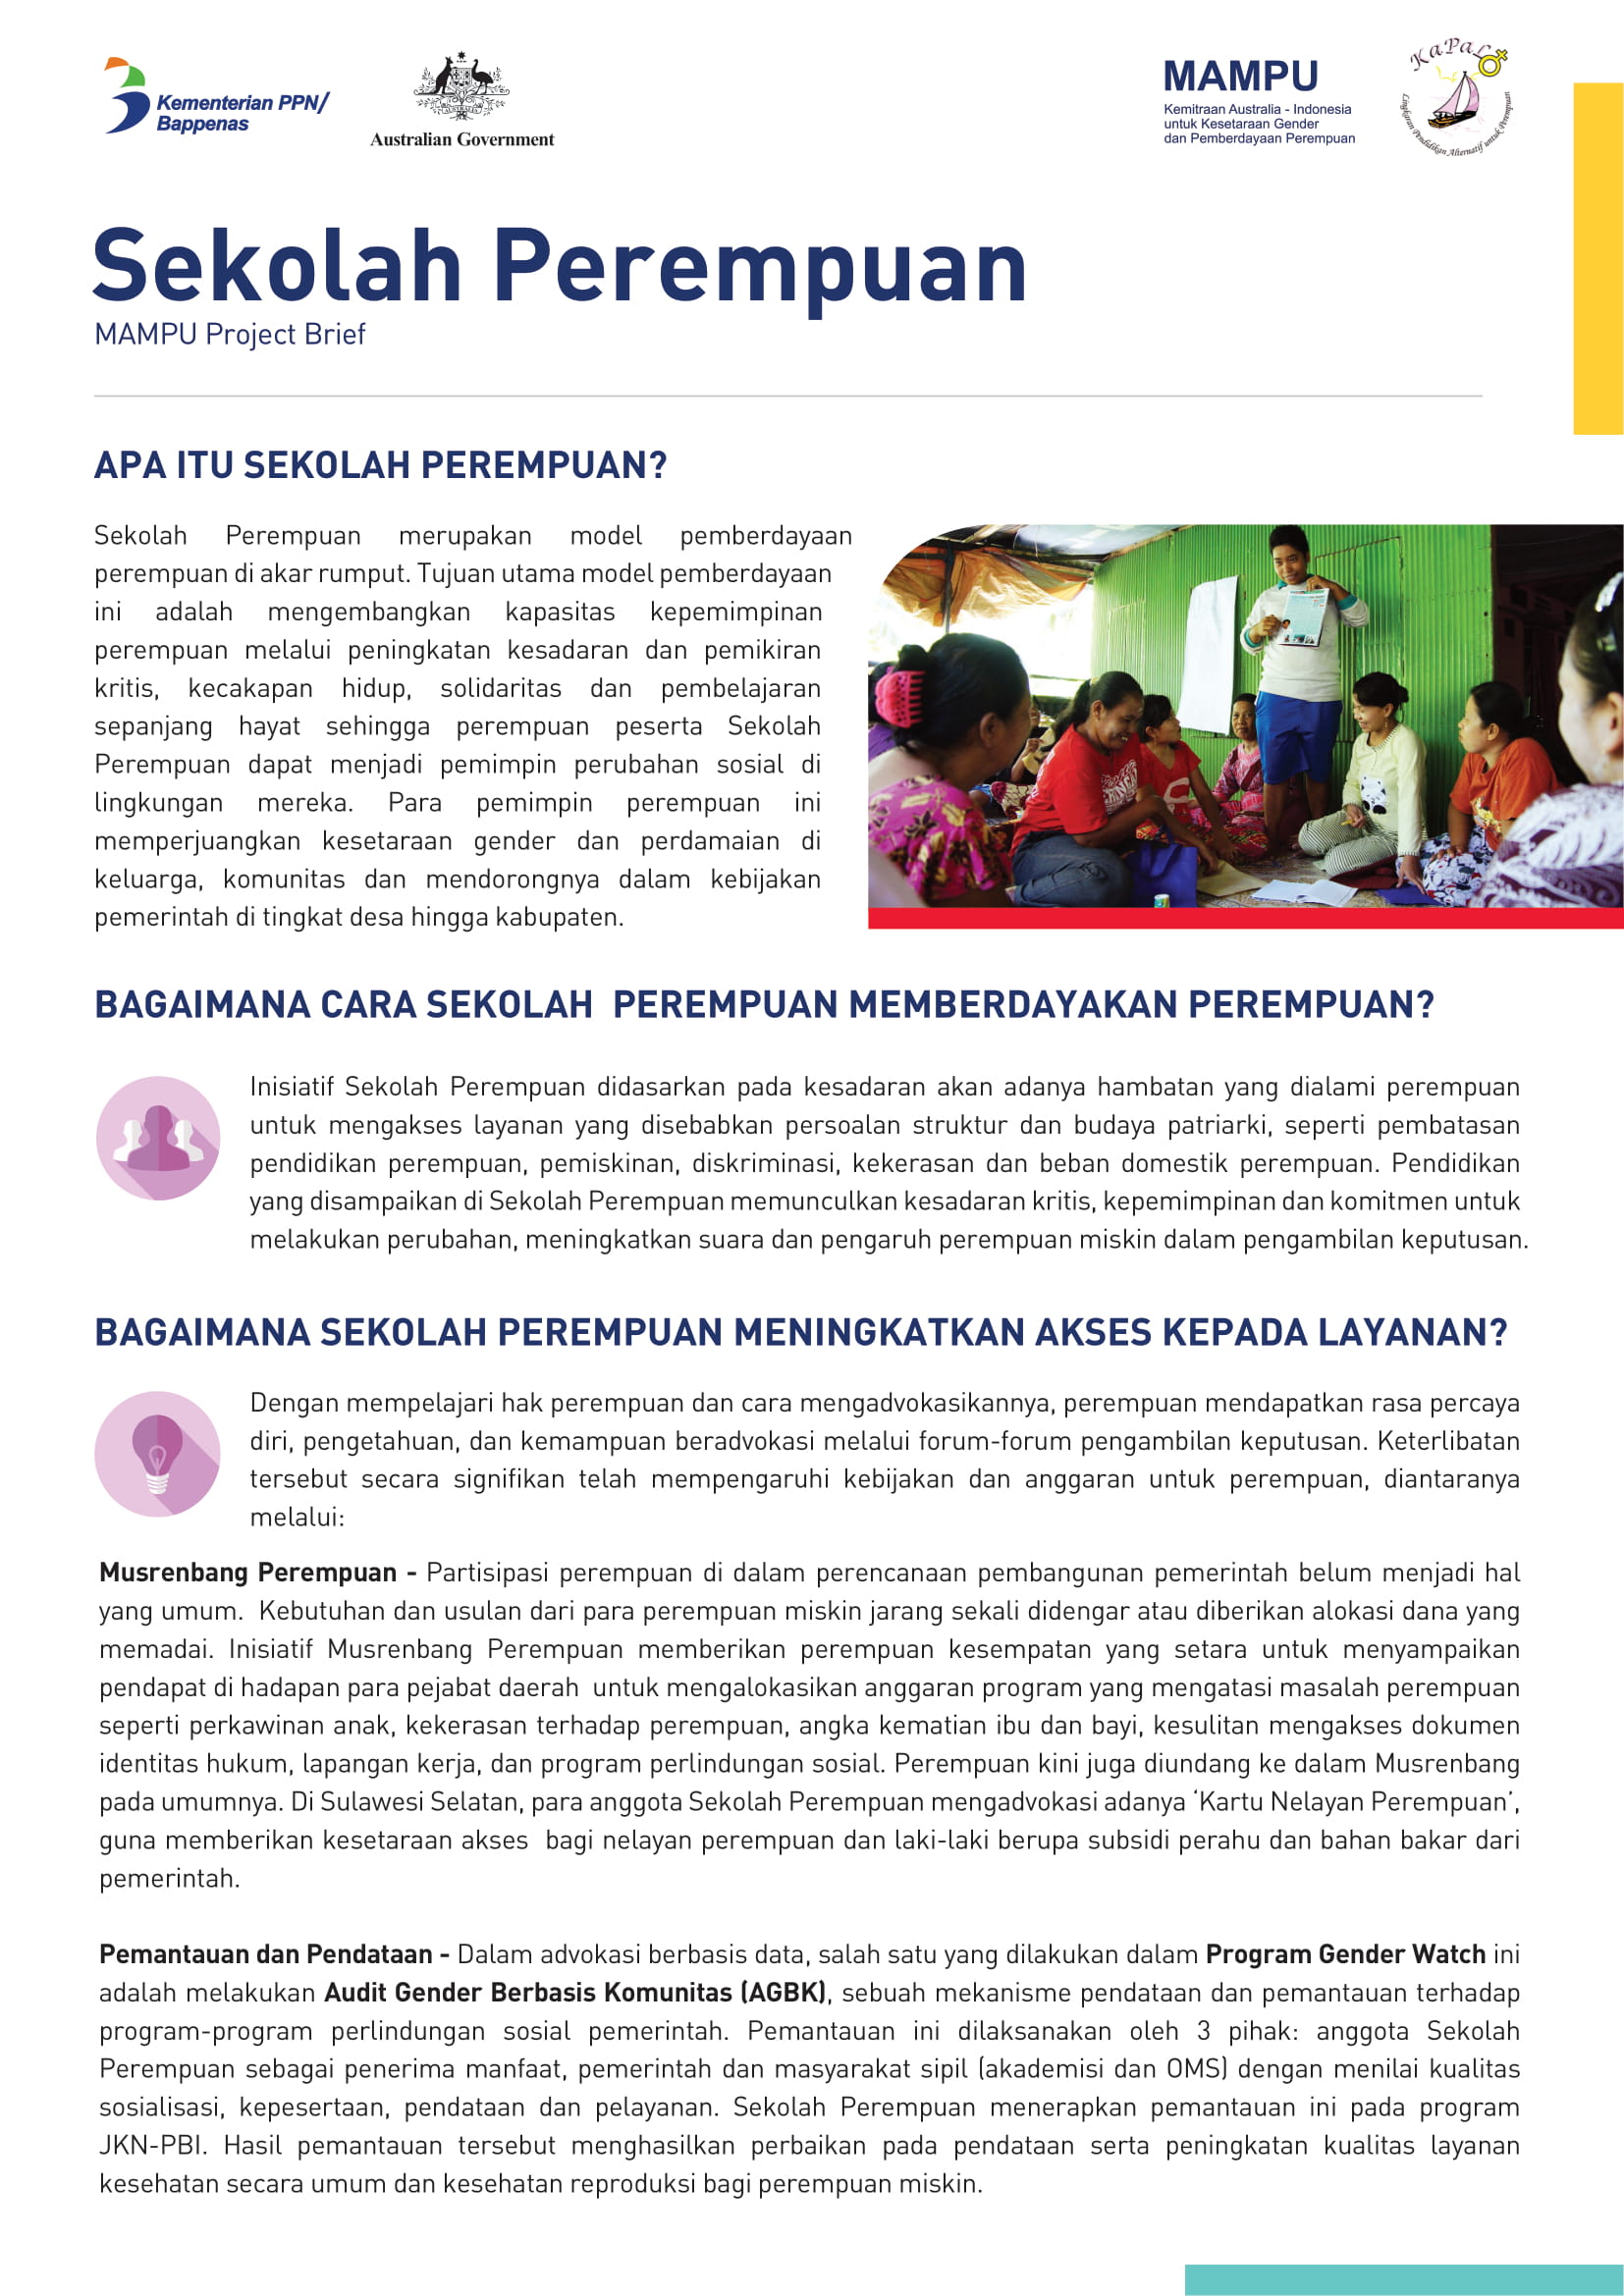 Project Brief: Sekolah Perempuan